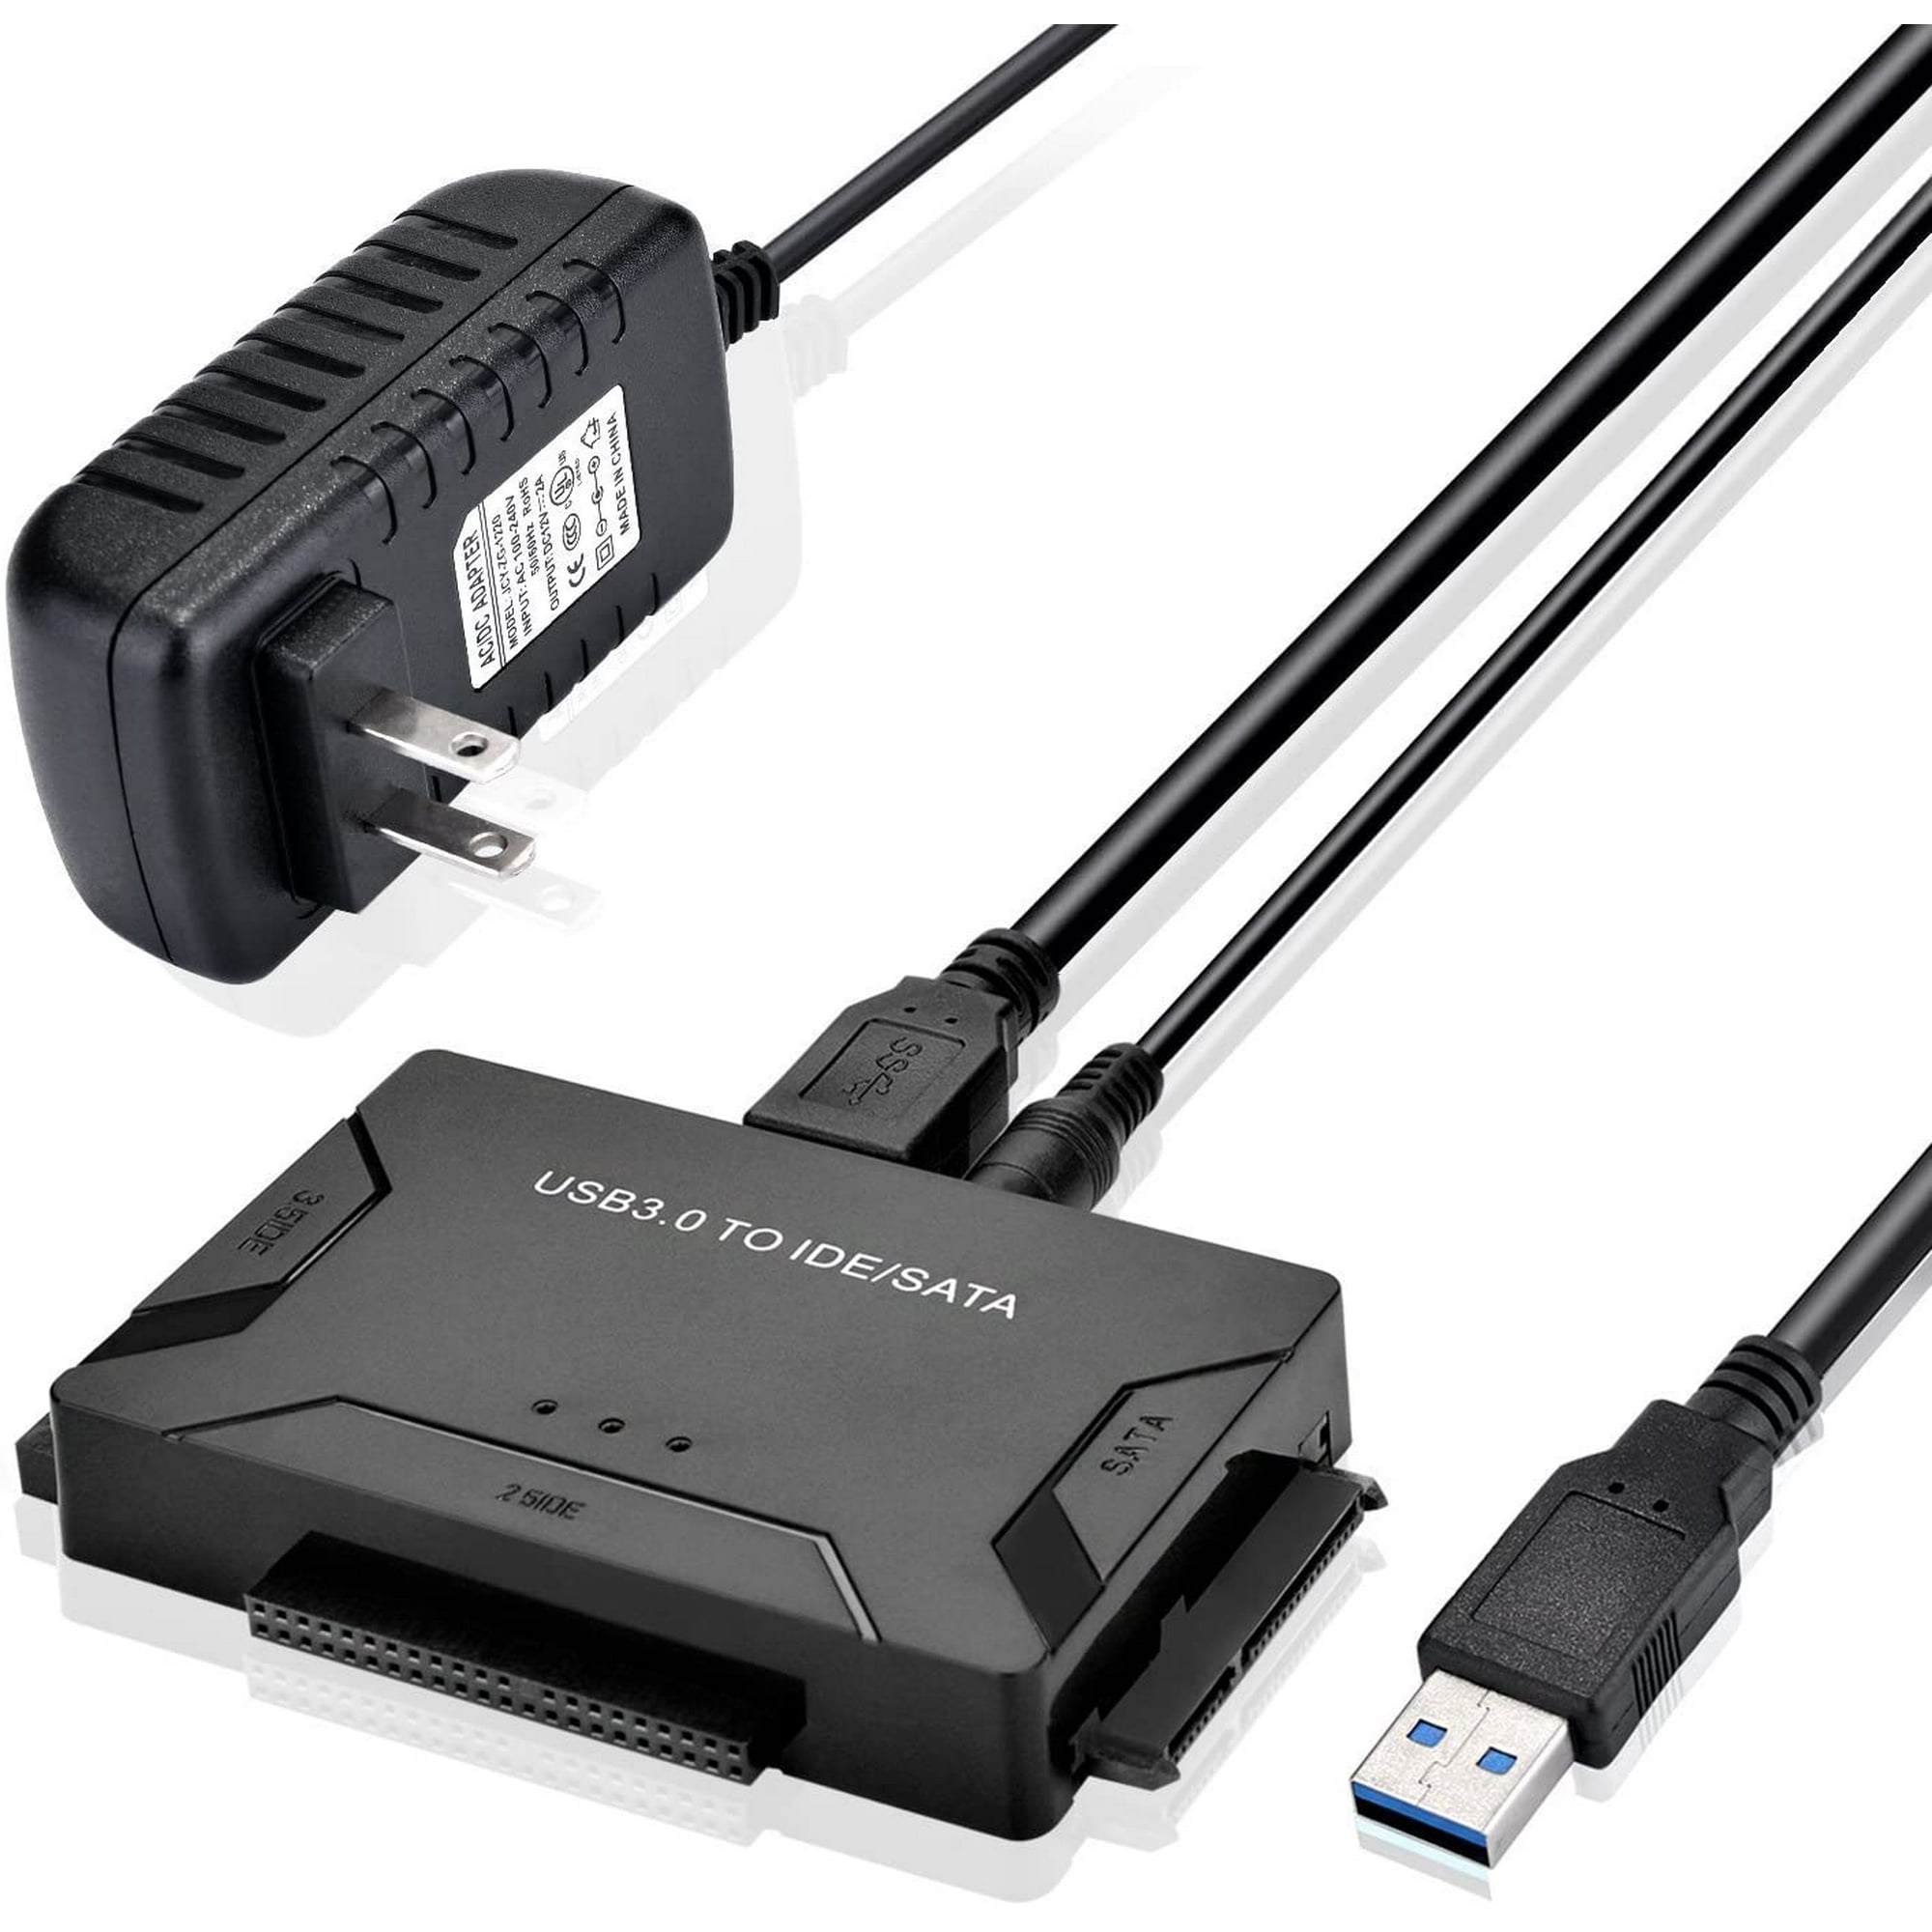 Danmark mock krig Kunova (TM) USB IDE Adapter USB 3.0 to Sata IDE Hard Drive Converter Combo  for 2.5" 3.5" IDE SATA SSD Hard Drives Disks | Walmart Canada